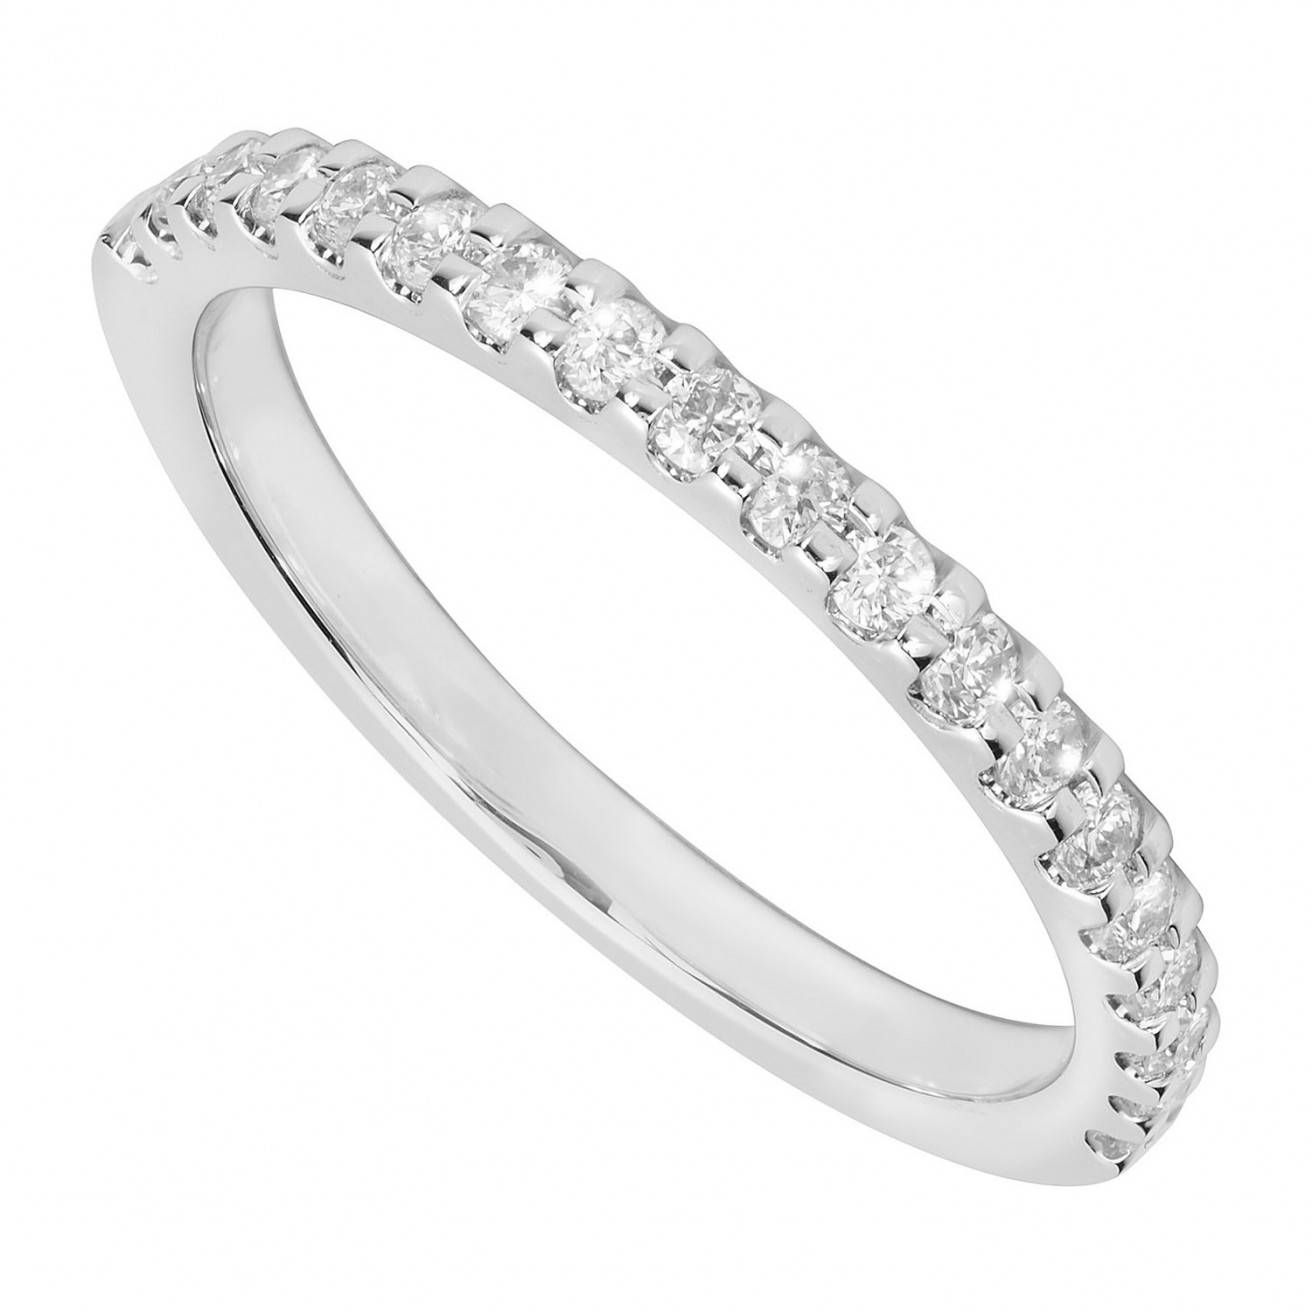 Buy Platinum Wedding Bands Online – Fraser Hart Intended For Diamond Platinum Wedding Rings (Photo 2 of 15)